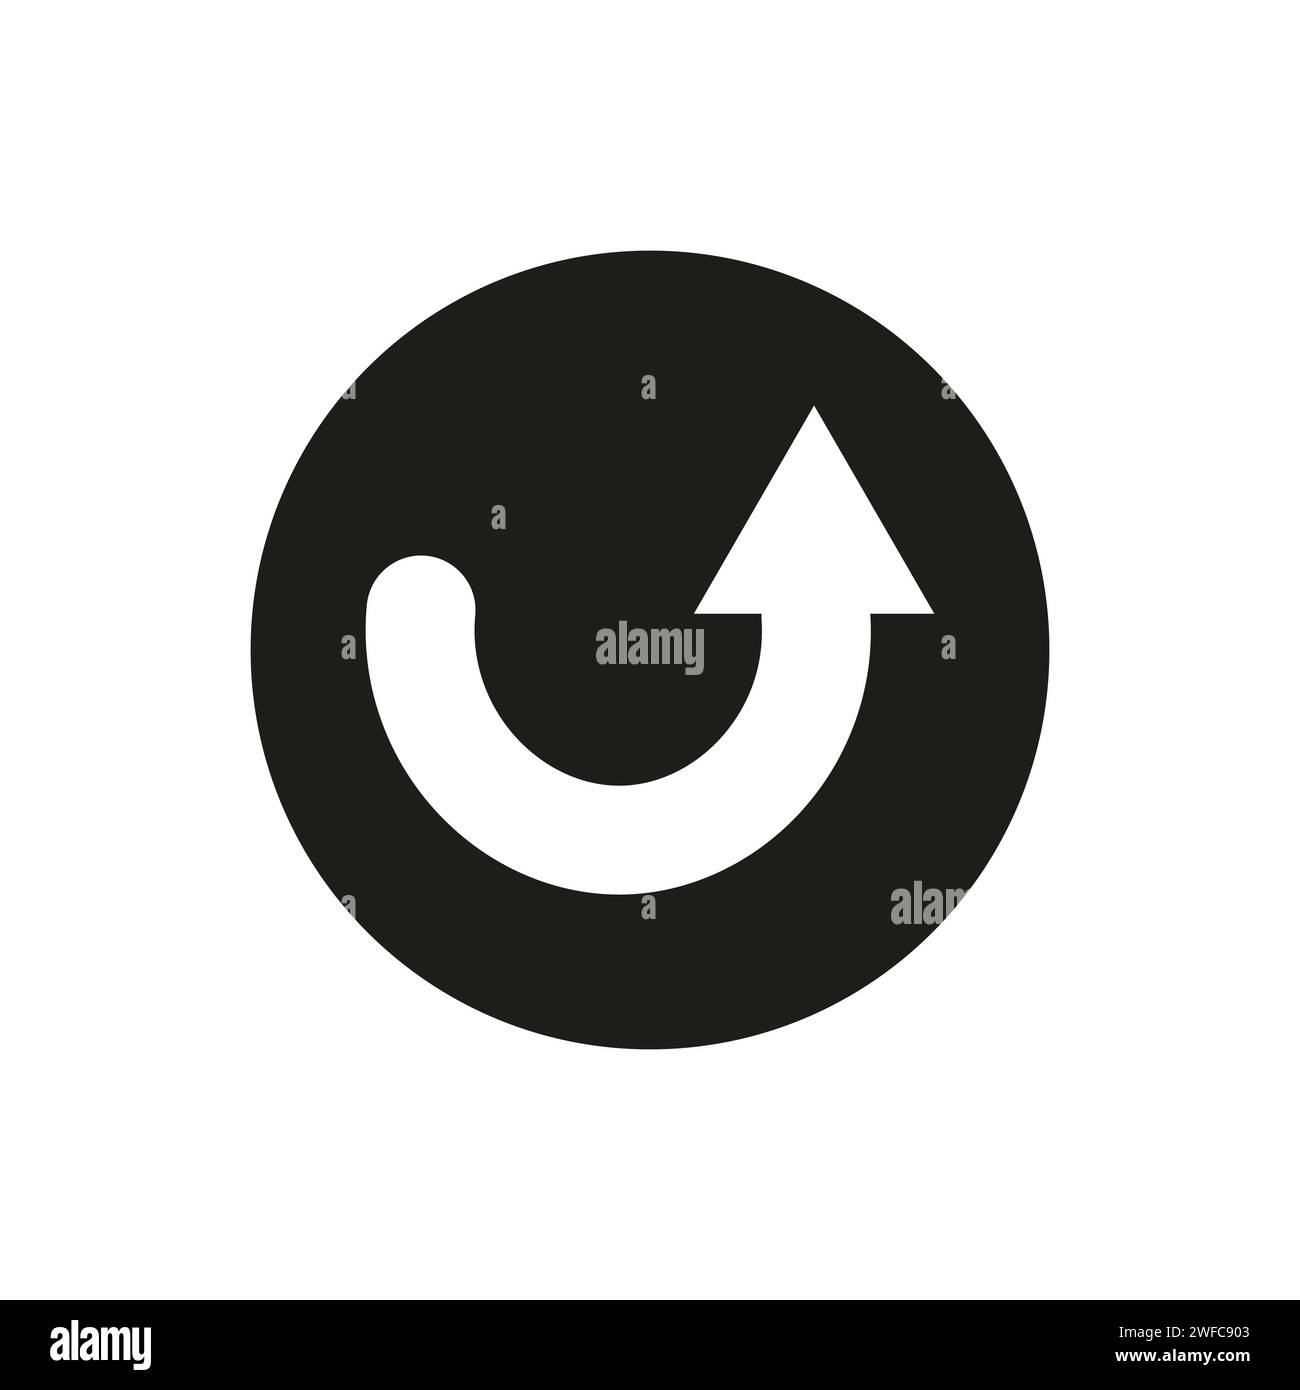 Circular right and down arrow. Semicircular figure. Black circle. Direction signpost. Vector illustration. Stock image. EPS 10. Stock Vector